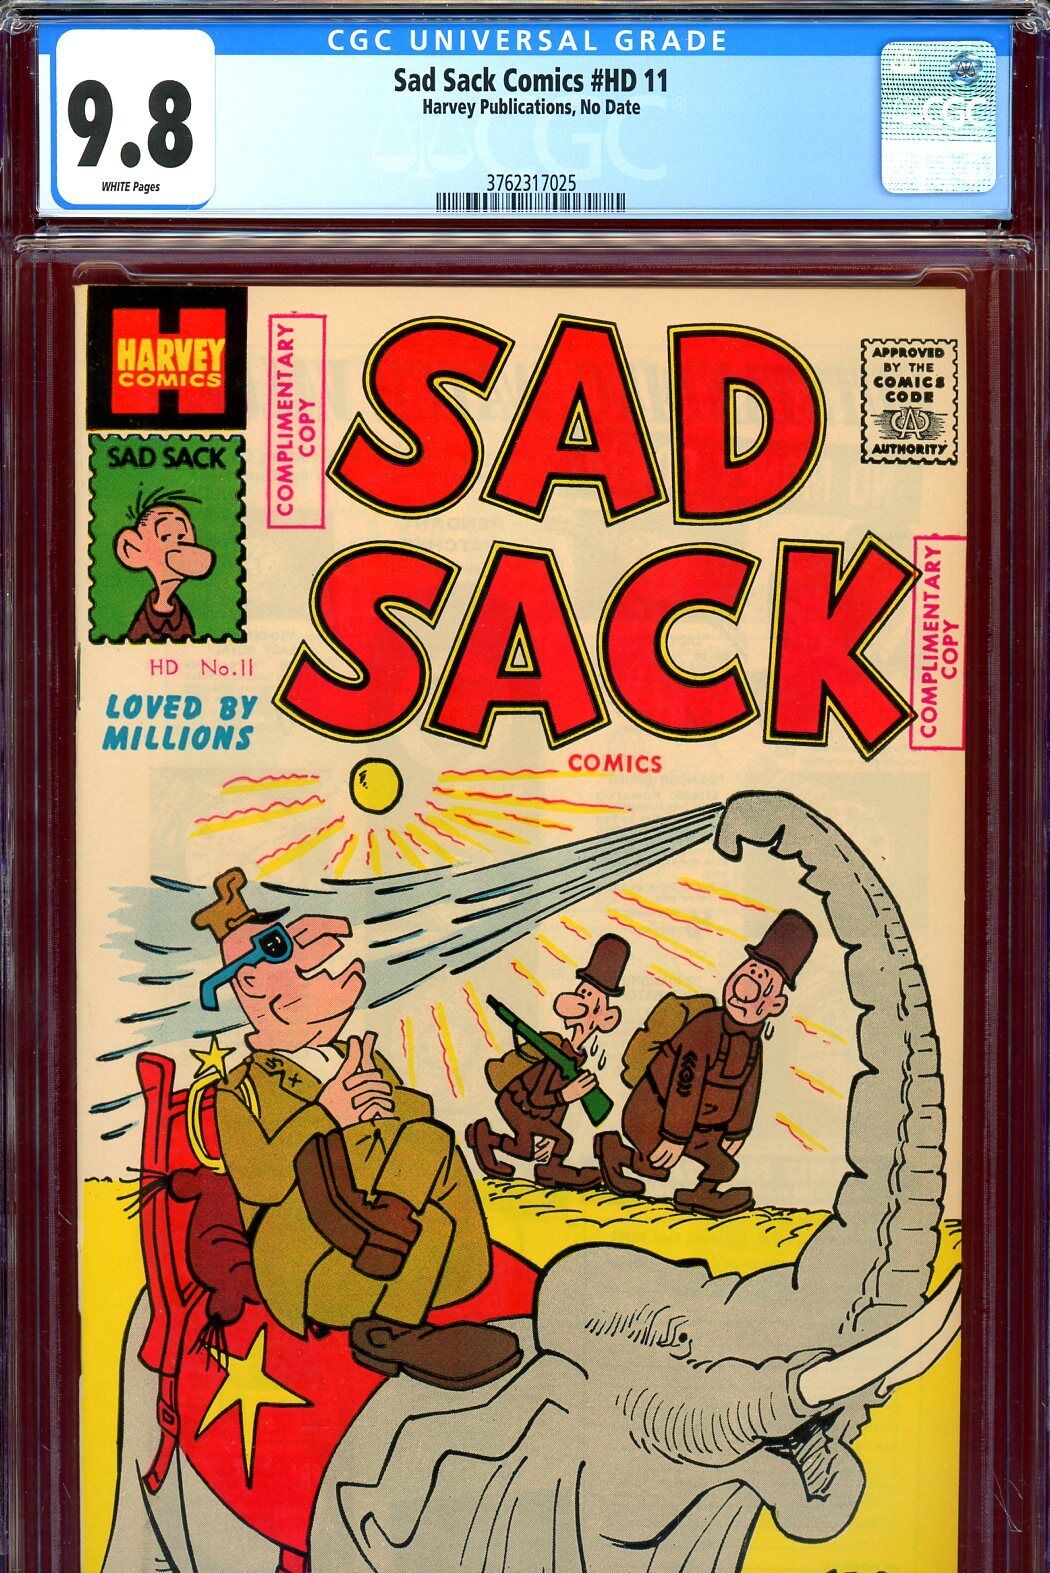 Sad Sack Comics #HD 11 CGC GRADED 9.8 -HIGHEST GRADED- Complimentary copy -1958 